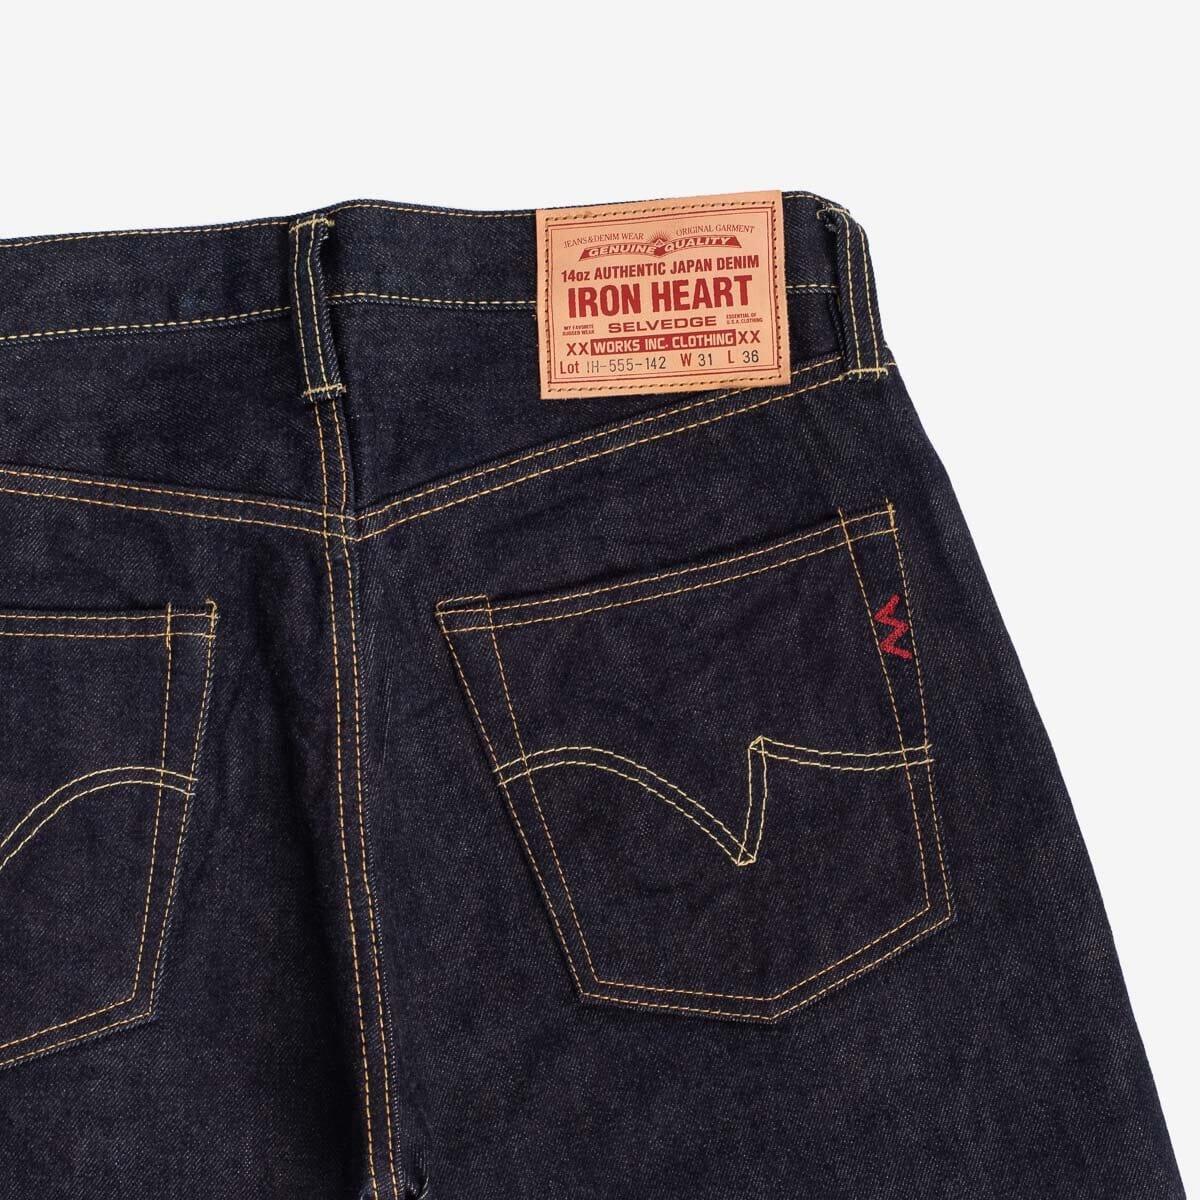 Iron Heart - IH-555S-142 - 14oz Selvedge Denim Super Slim Cut Jeans - Indigo - City Workshop Men's Supply Co.